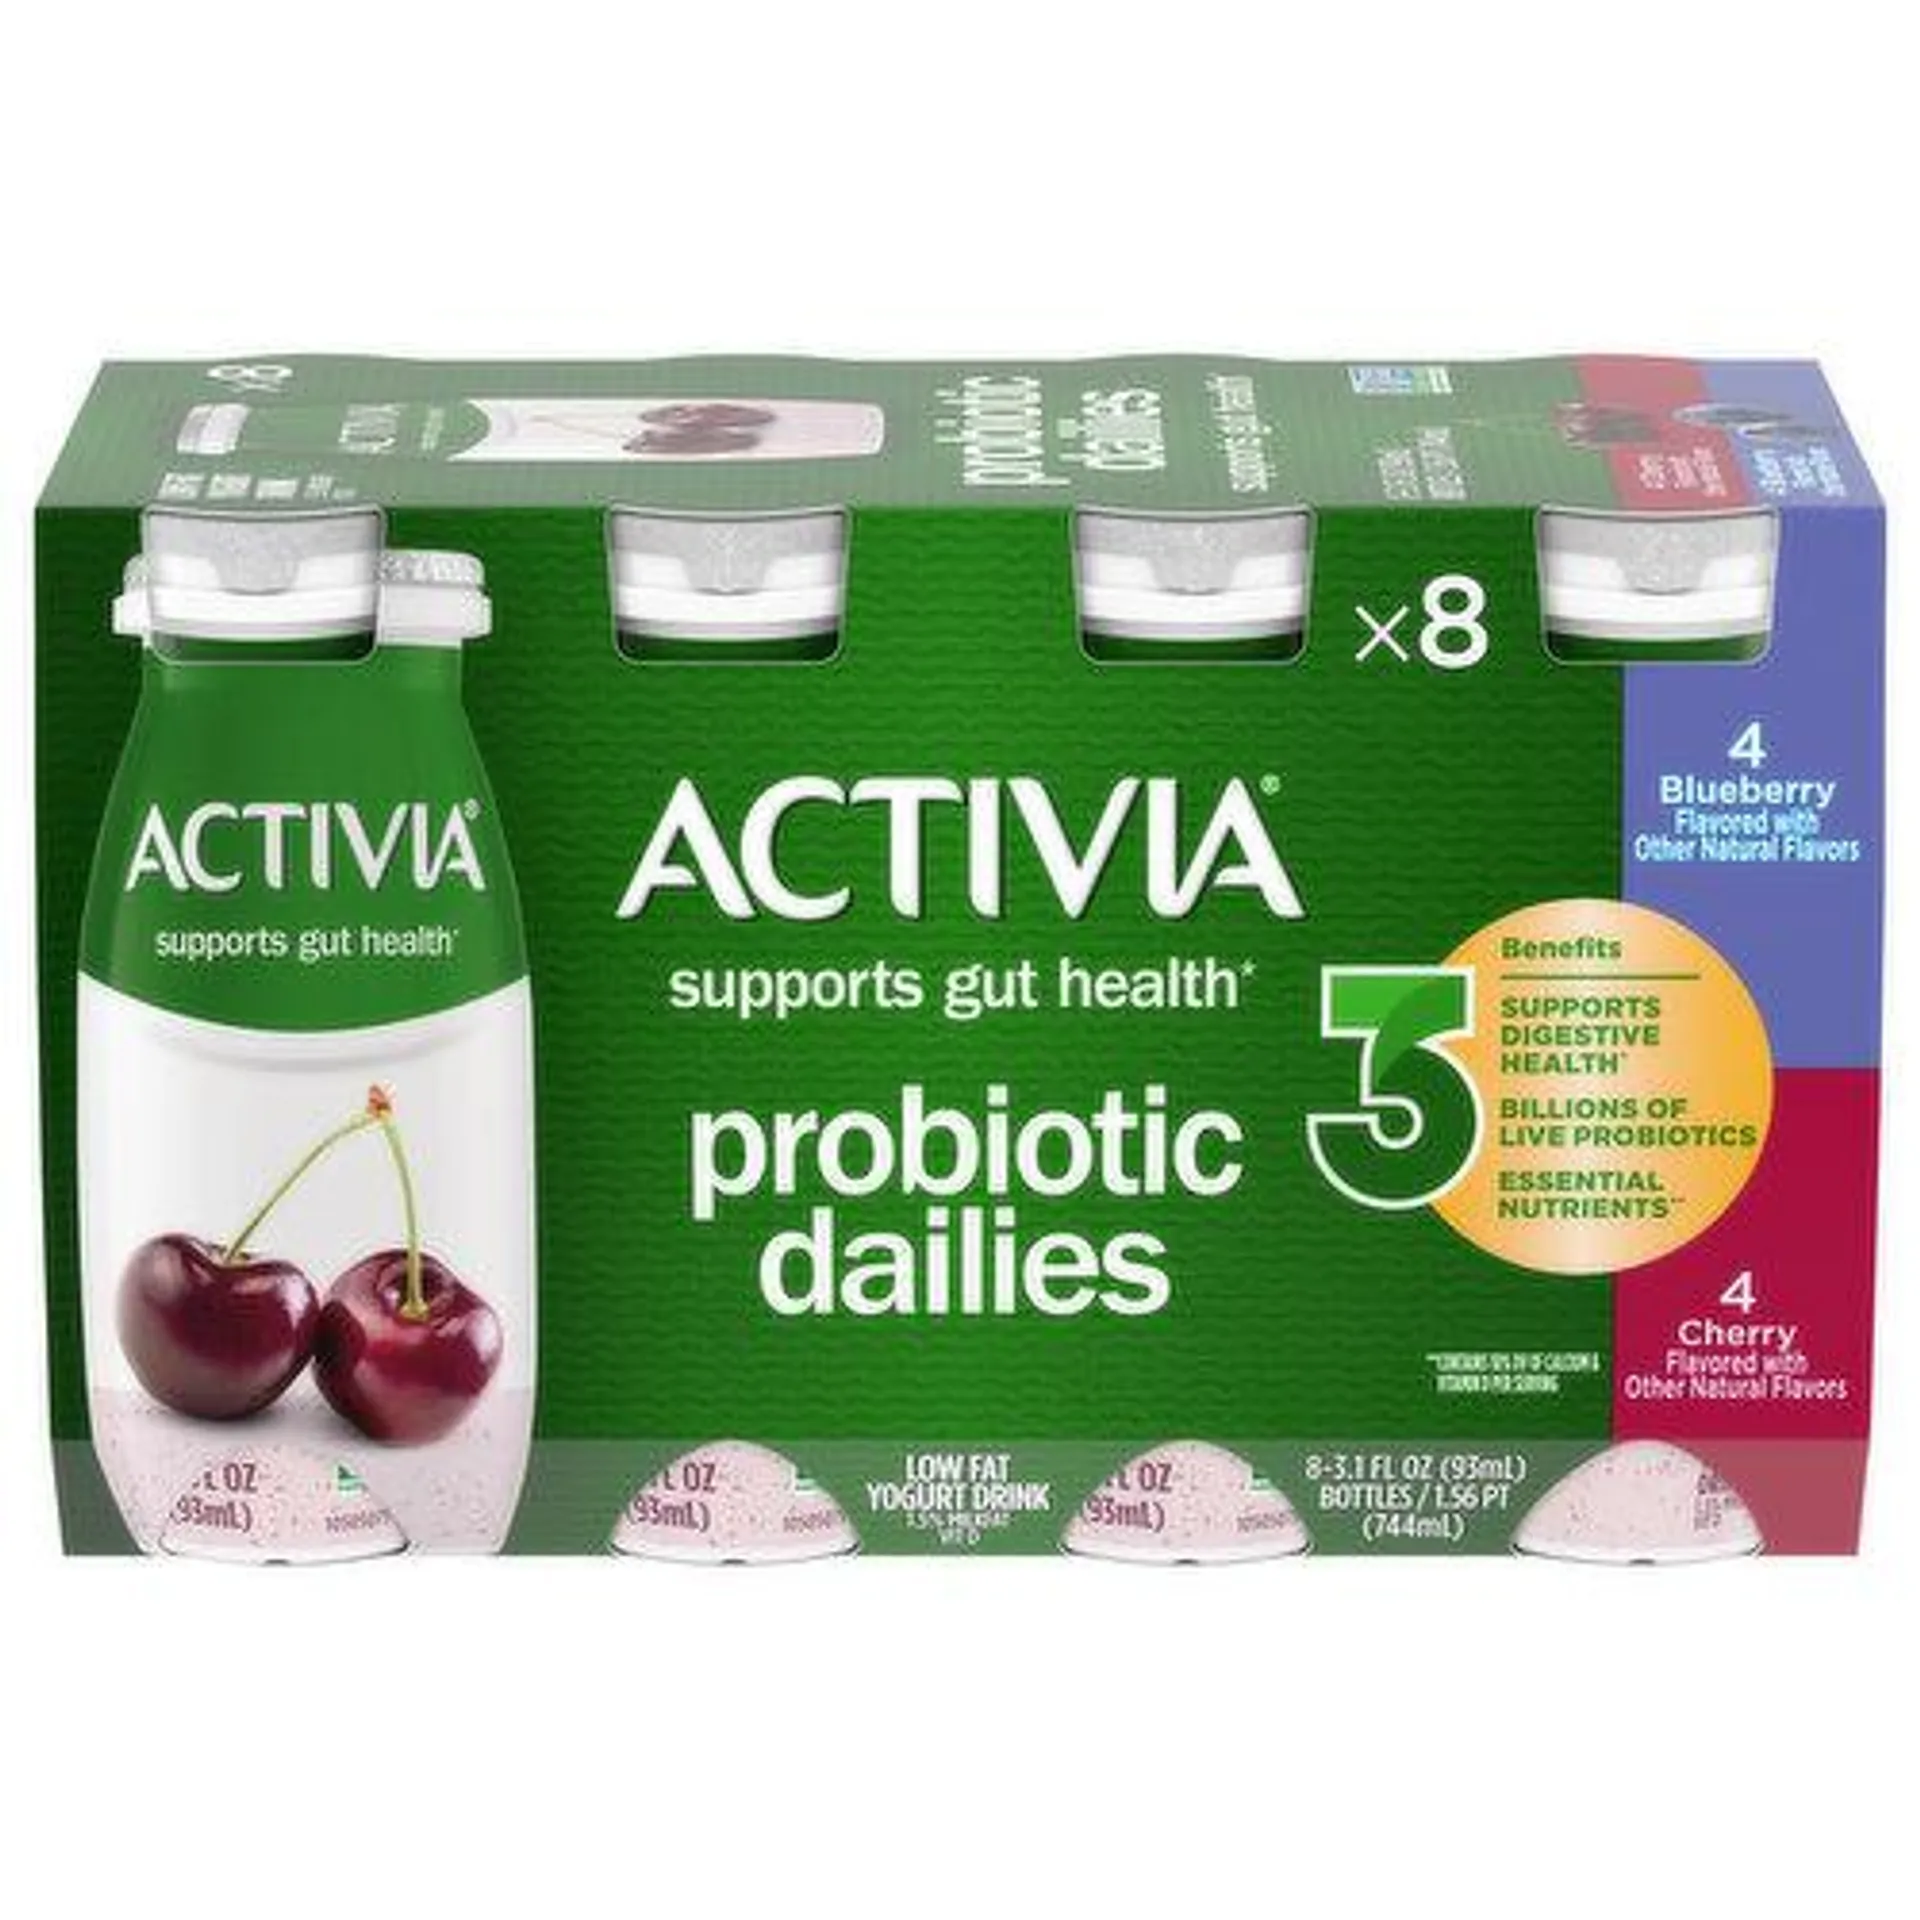 Activia Yogurt Drink, Low Fat, Blueberry, Cherry - 8 Each